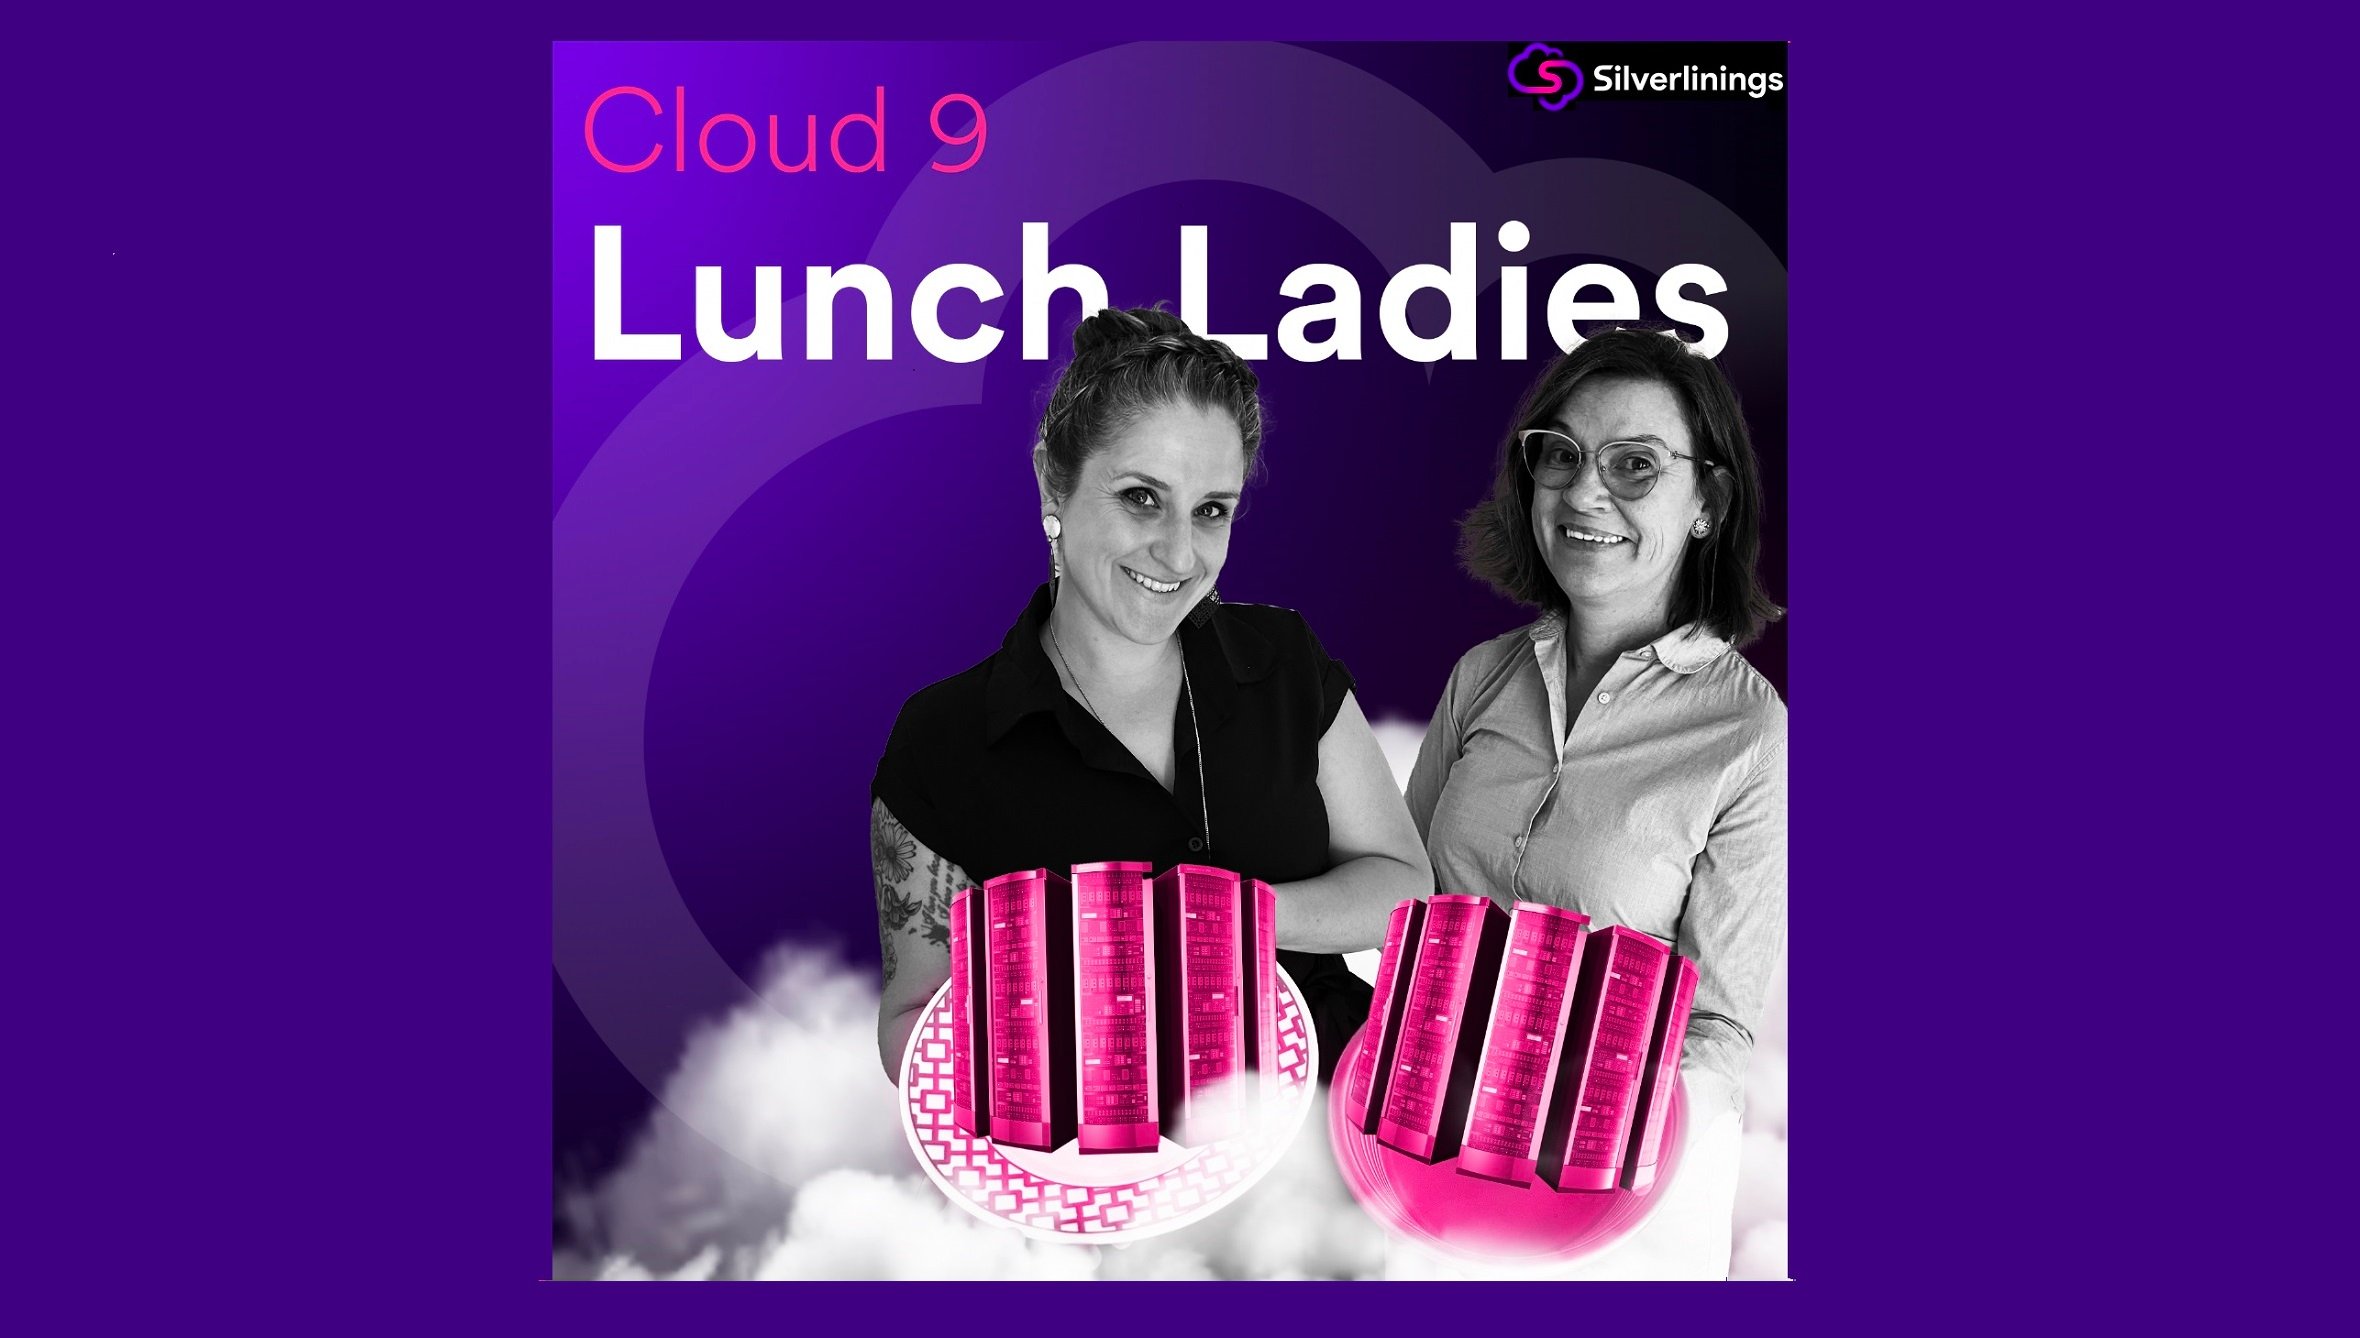 Lunch ladies logo SL logo wide